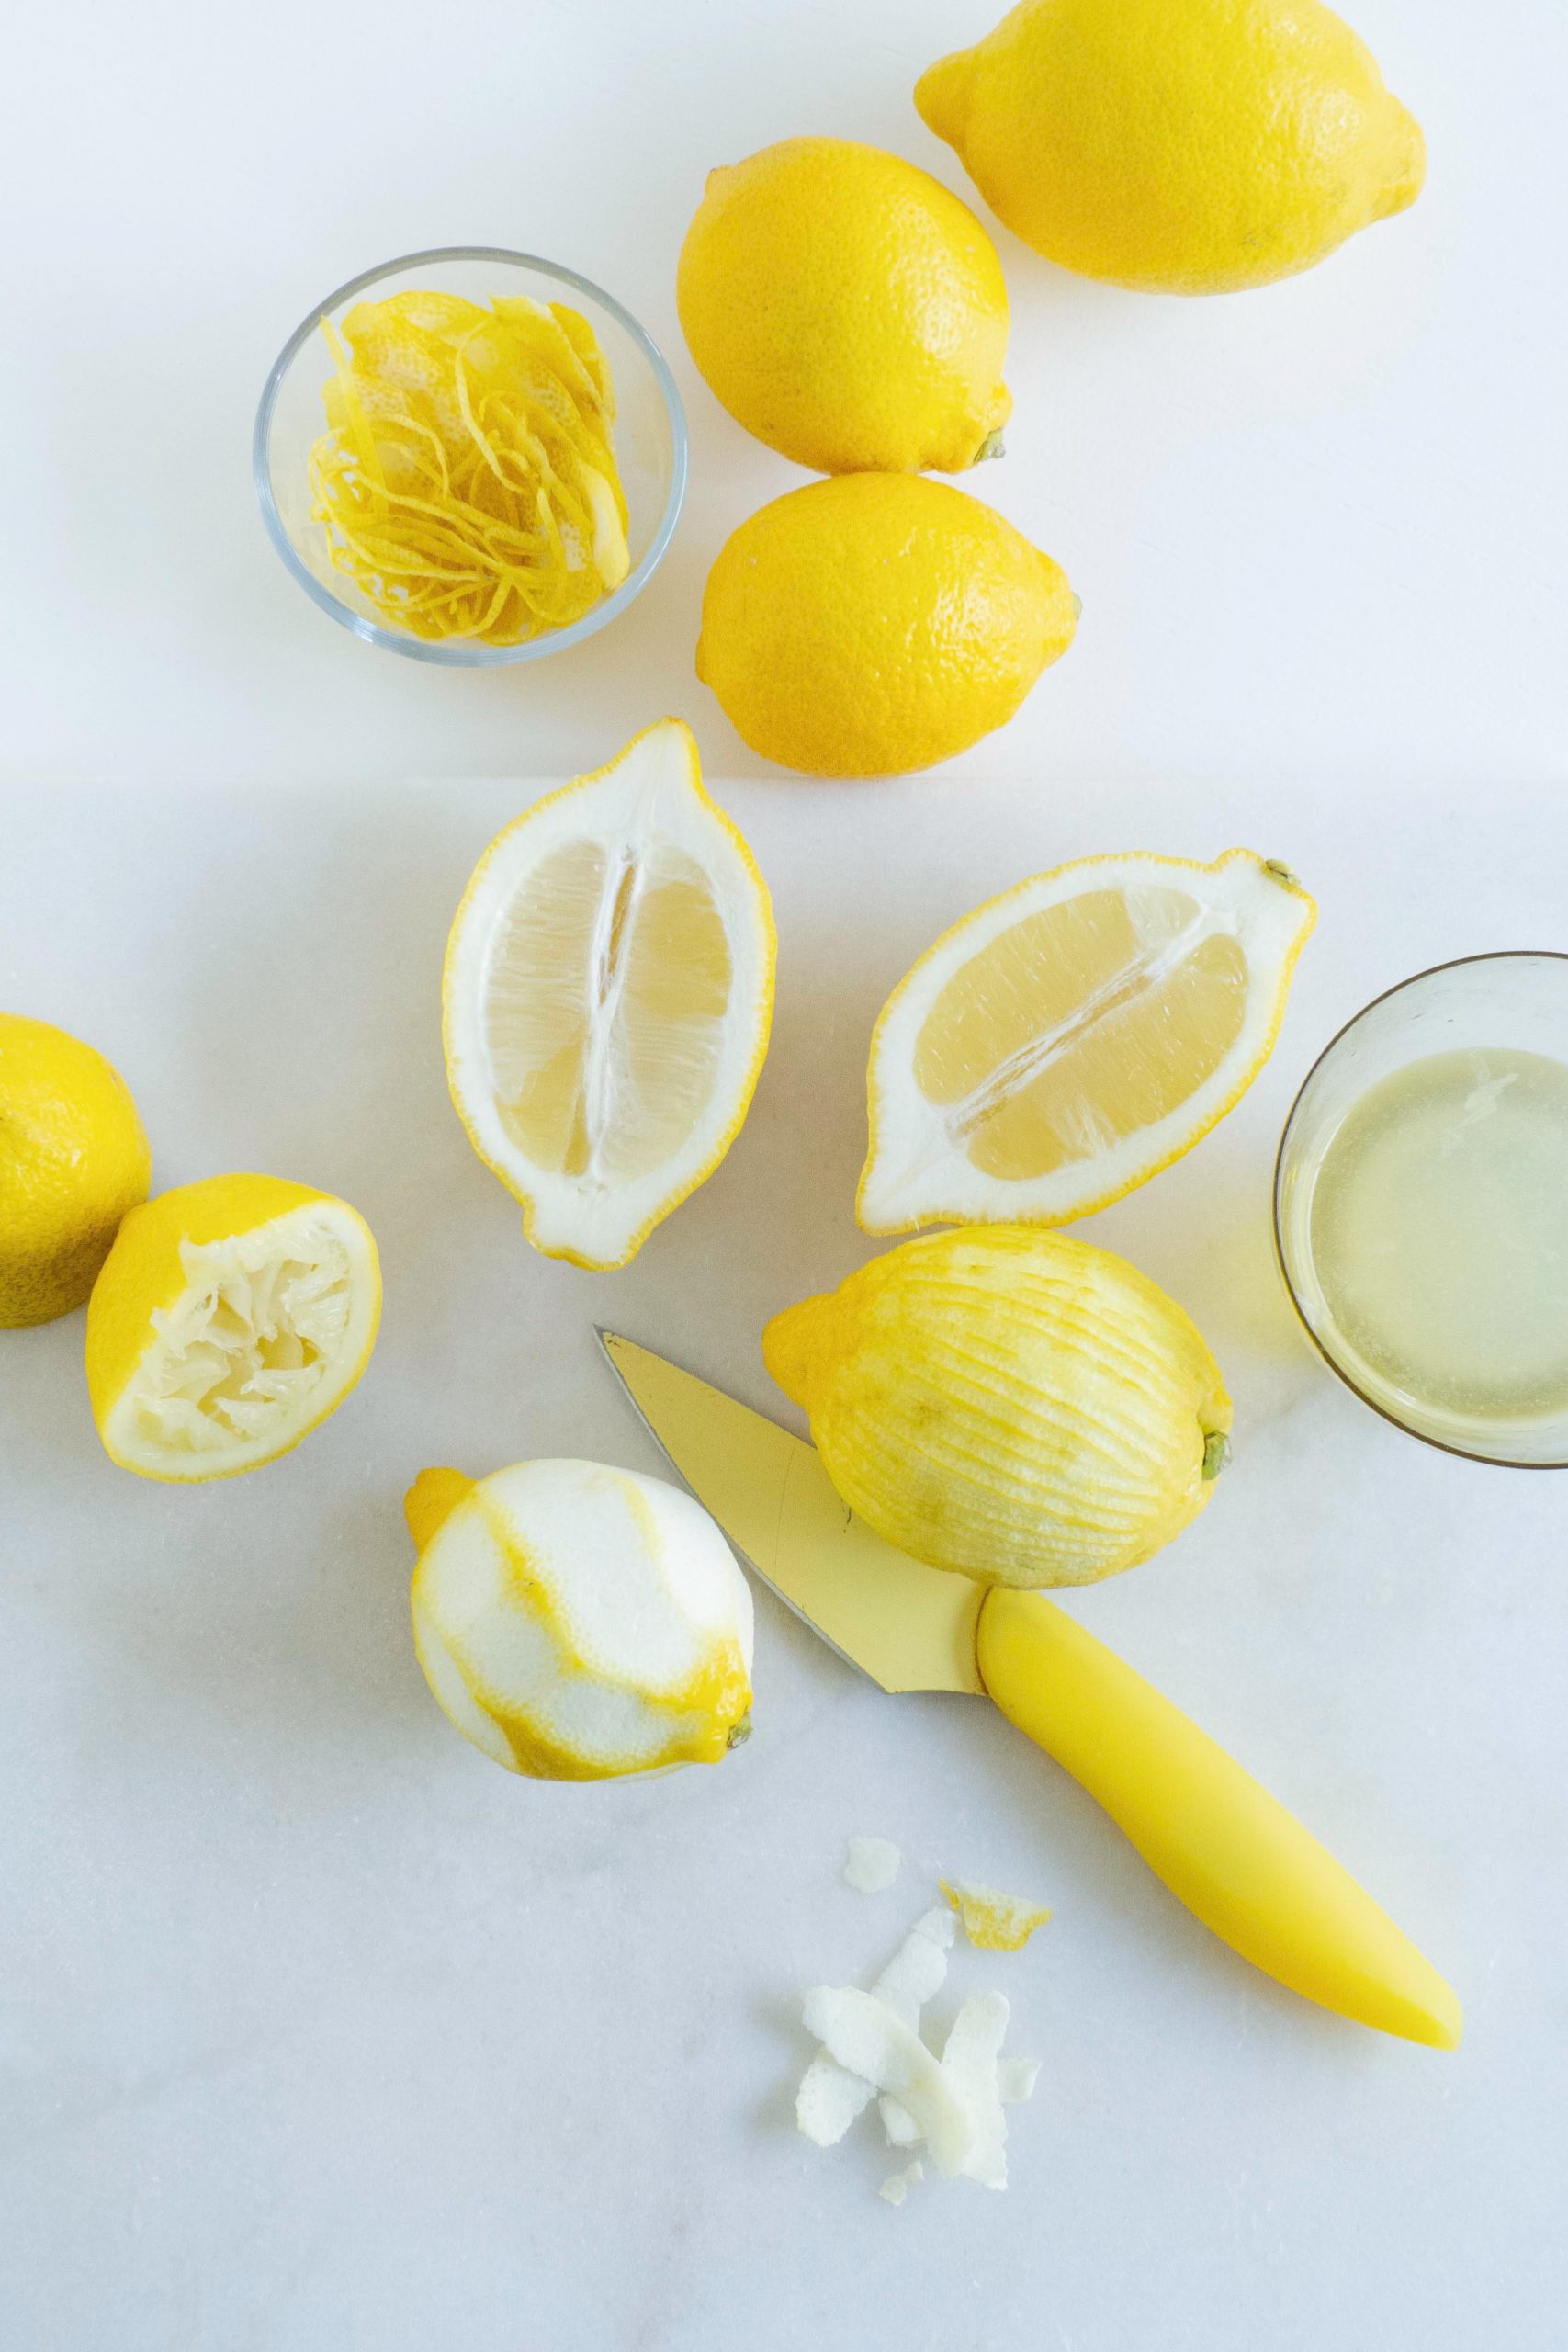 lemon juice pH level 3